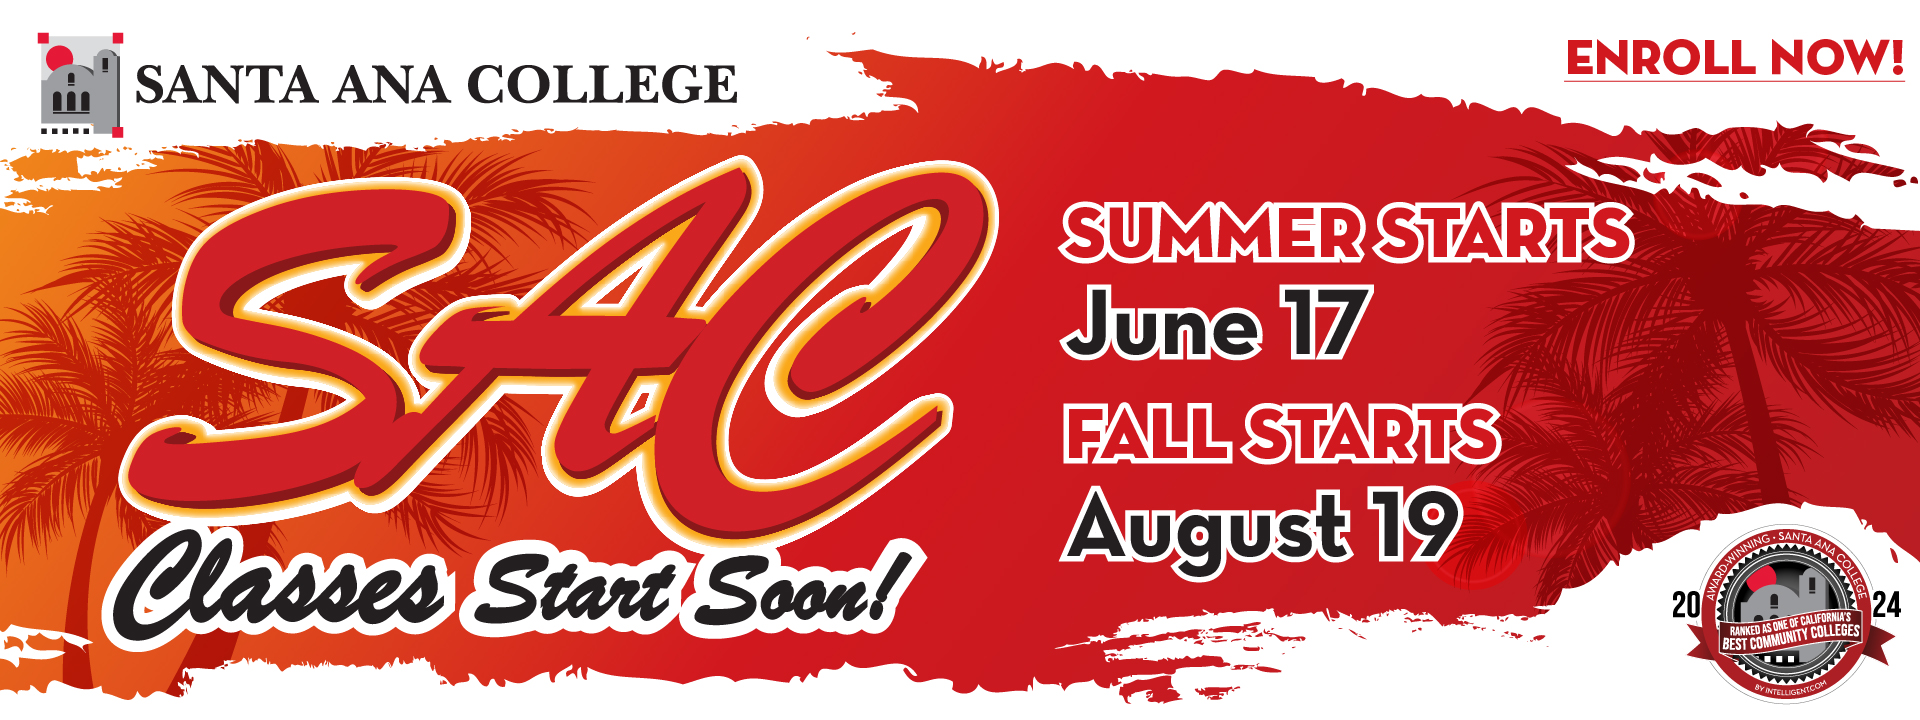 SAC Classes start soon. Summer beings June 17. Fall starts August 19